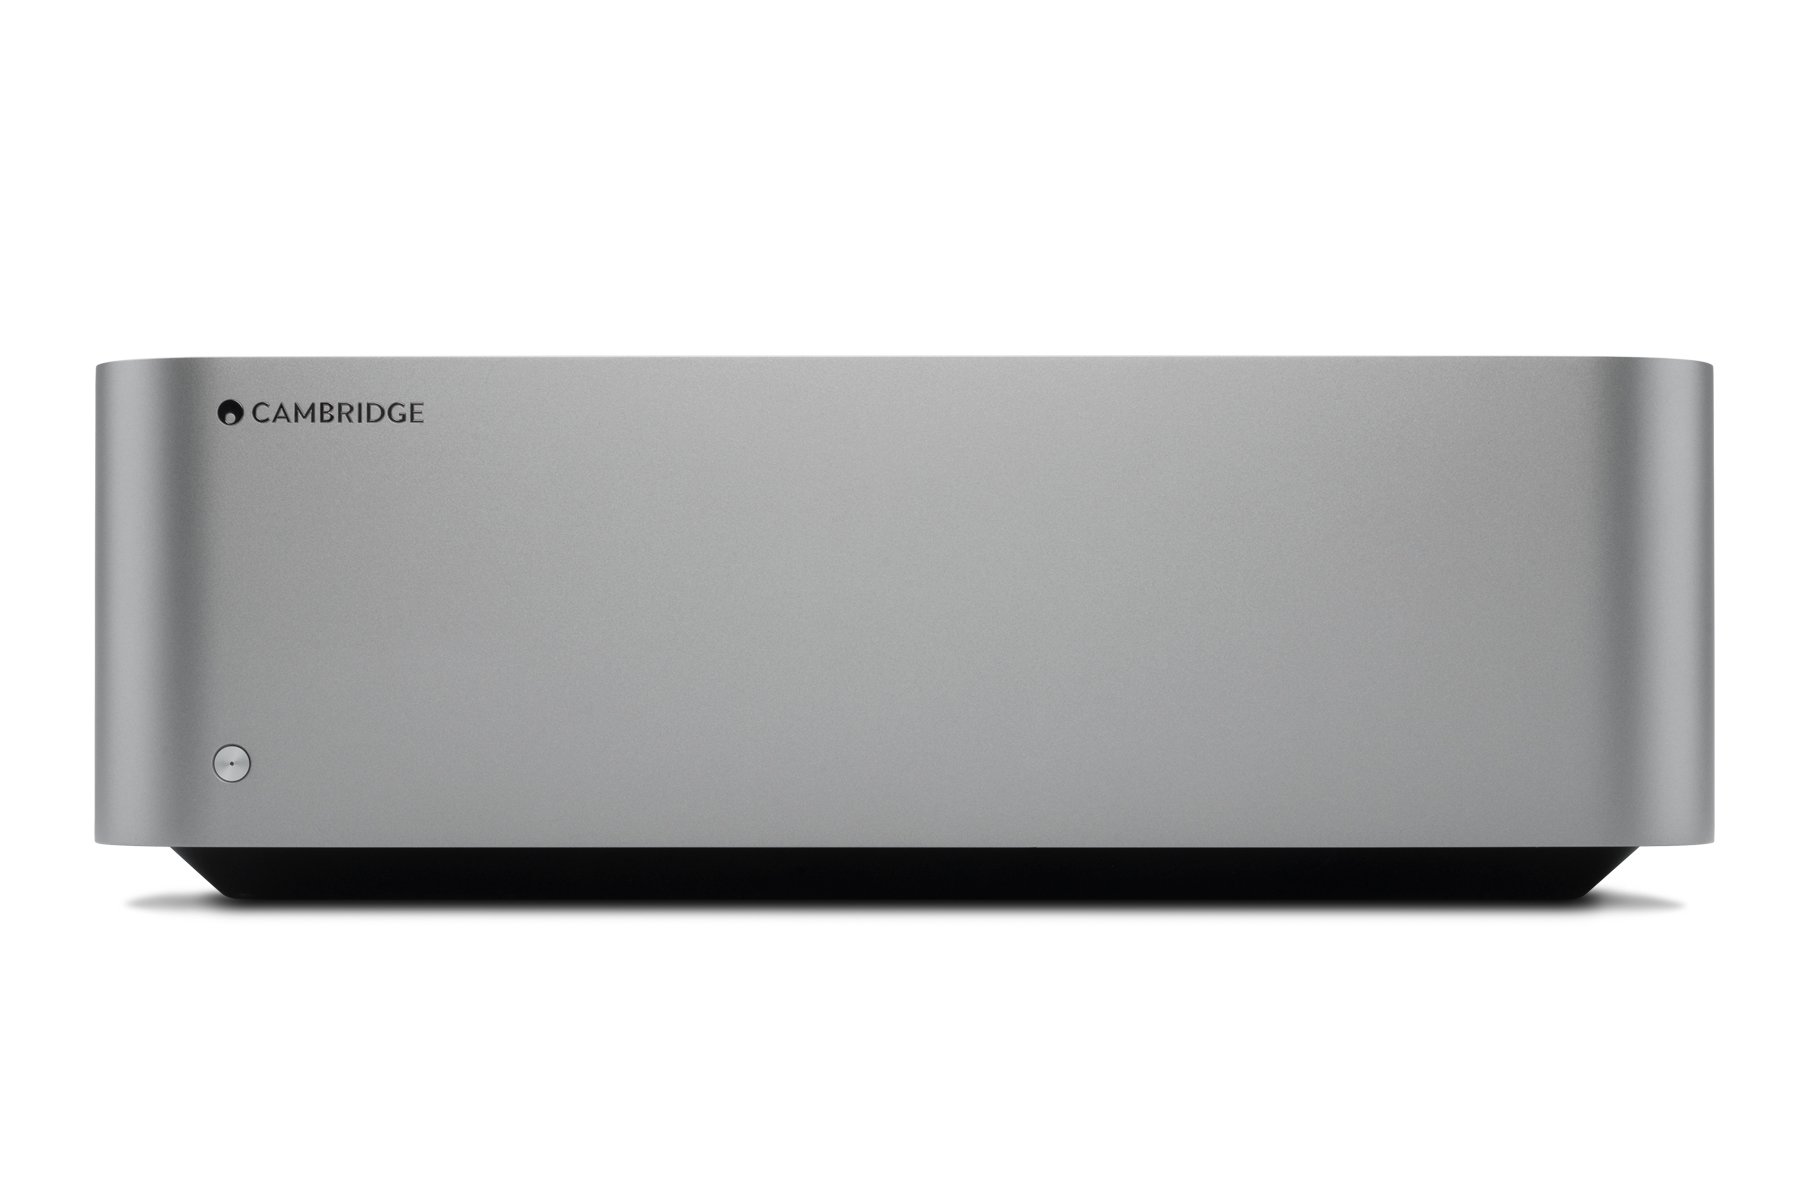 Cambridge Audio Edge W Power Amplifier dark grey